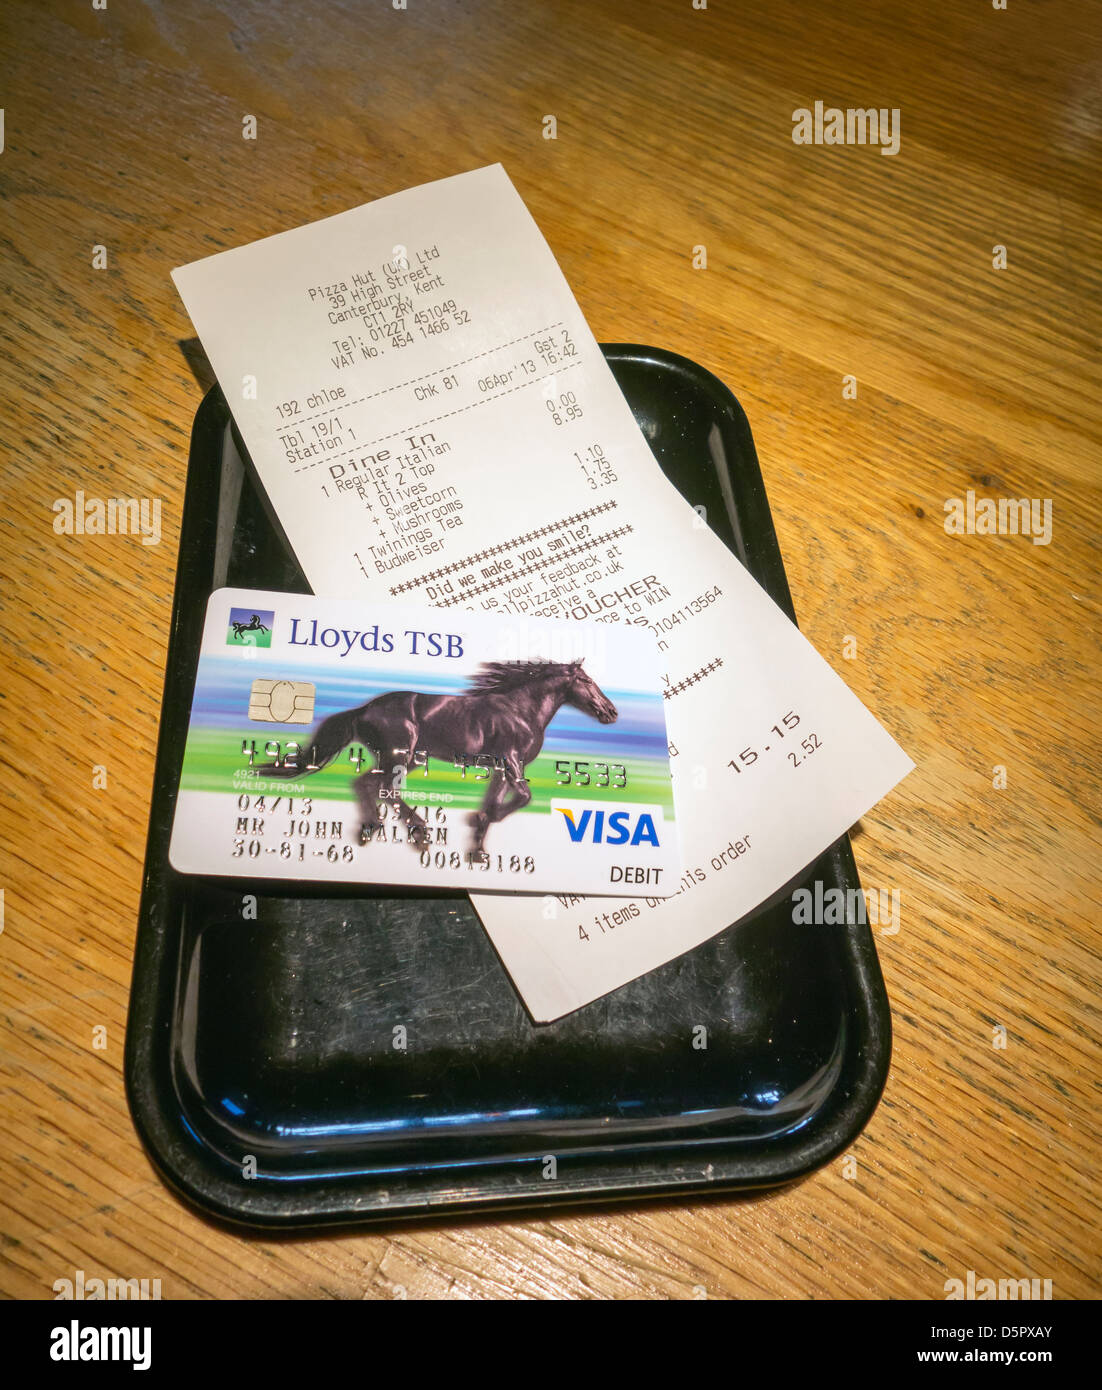 Pizza Hut Restaurant Food Bill and Visa Debit Card Stock Photo